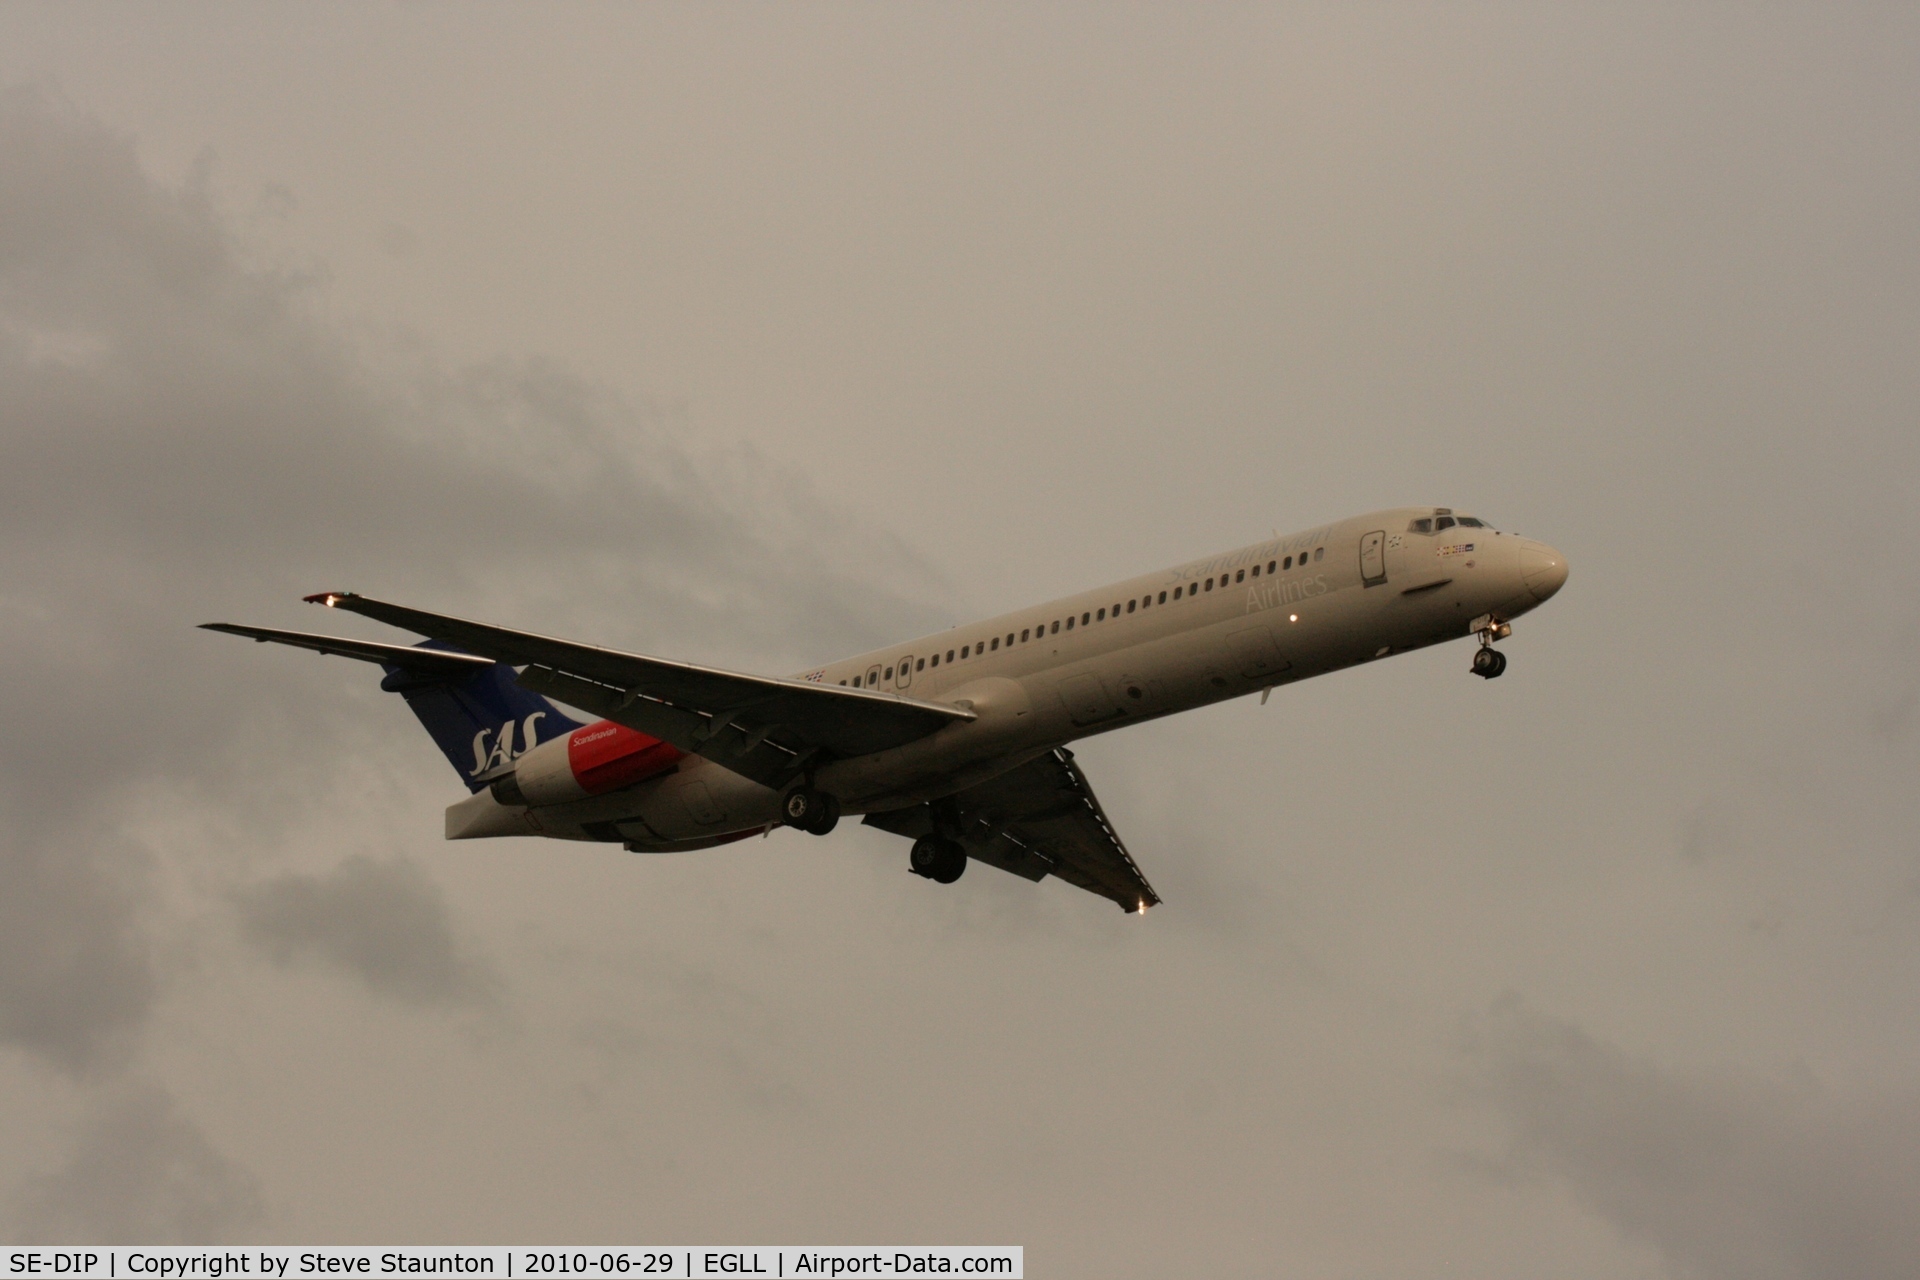 SE-DIP, 1991 McDonnell Douglas MD-87 (DC-9-87) C/N 53010, Taken at Heathrow Airport, June 2010